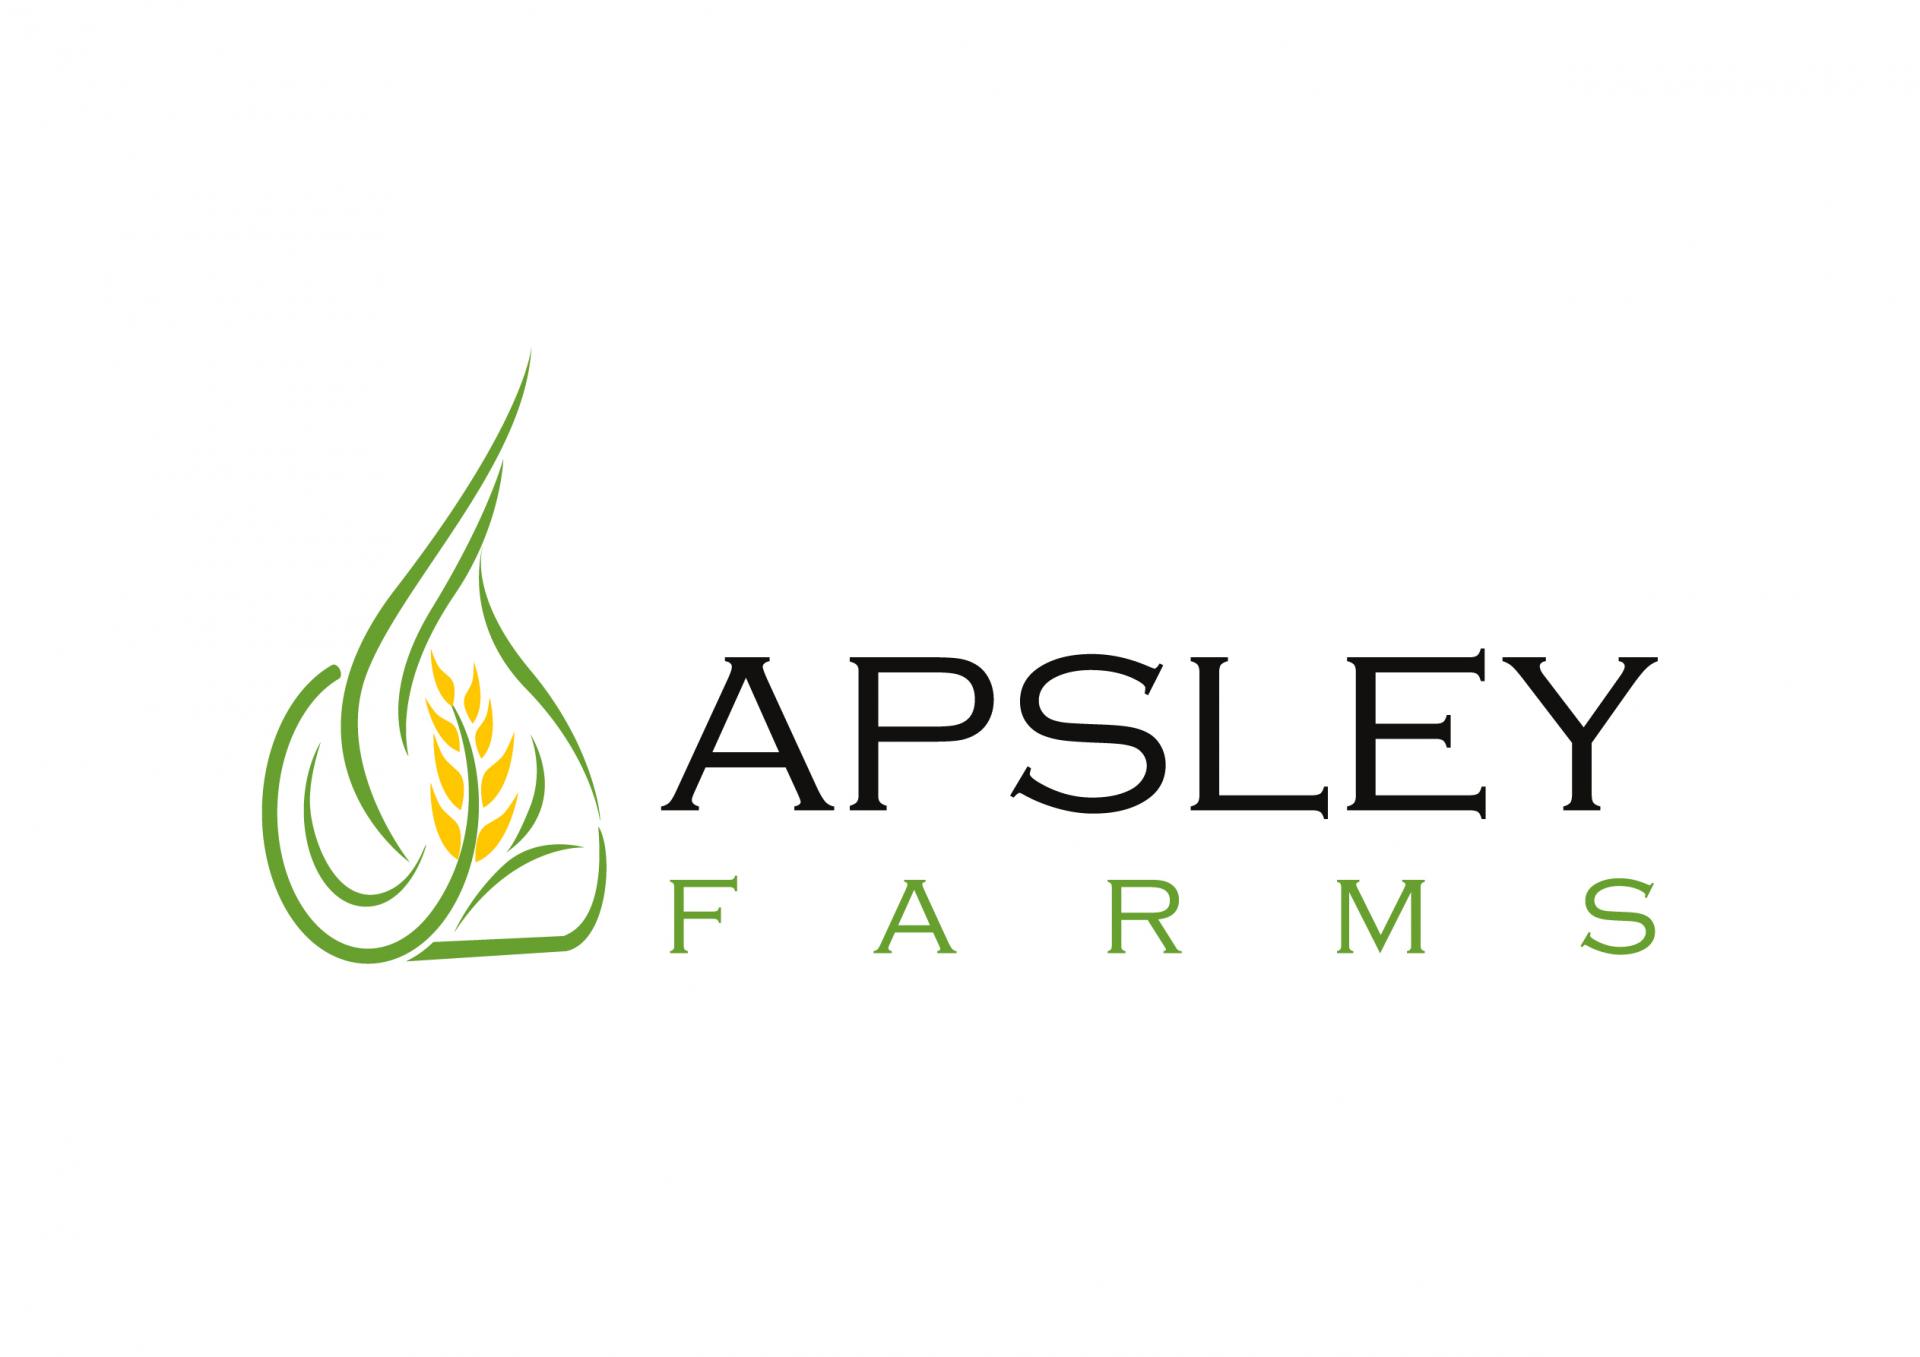 uploads/images/Apsley Farms Logo 4ed0eefe8a59591c71f66fc2a3359ec2